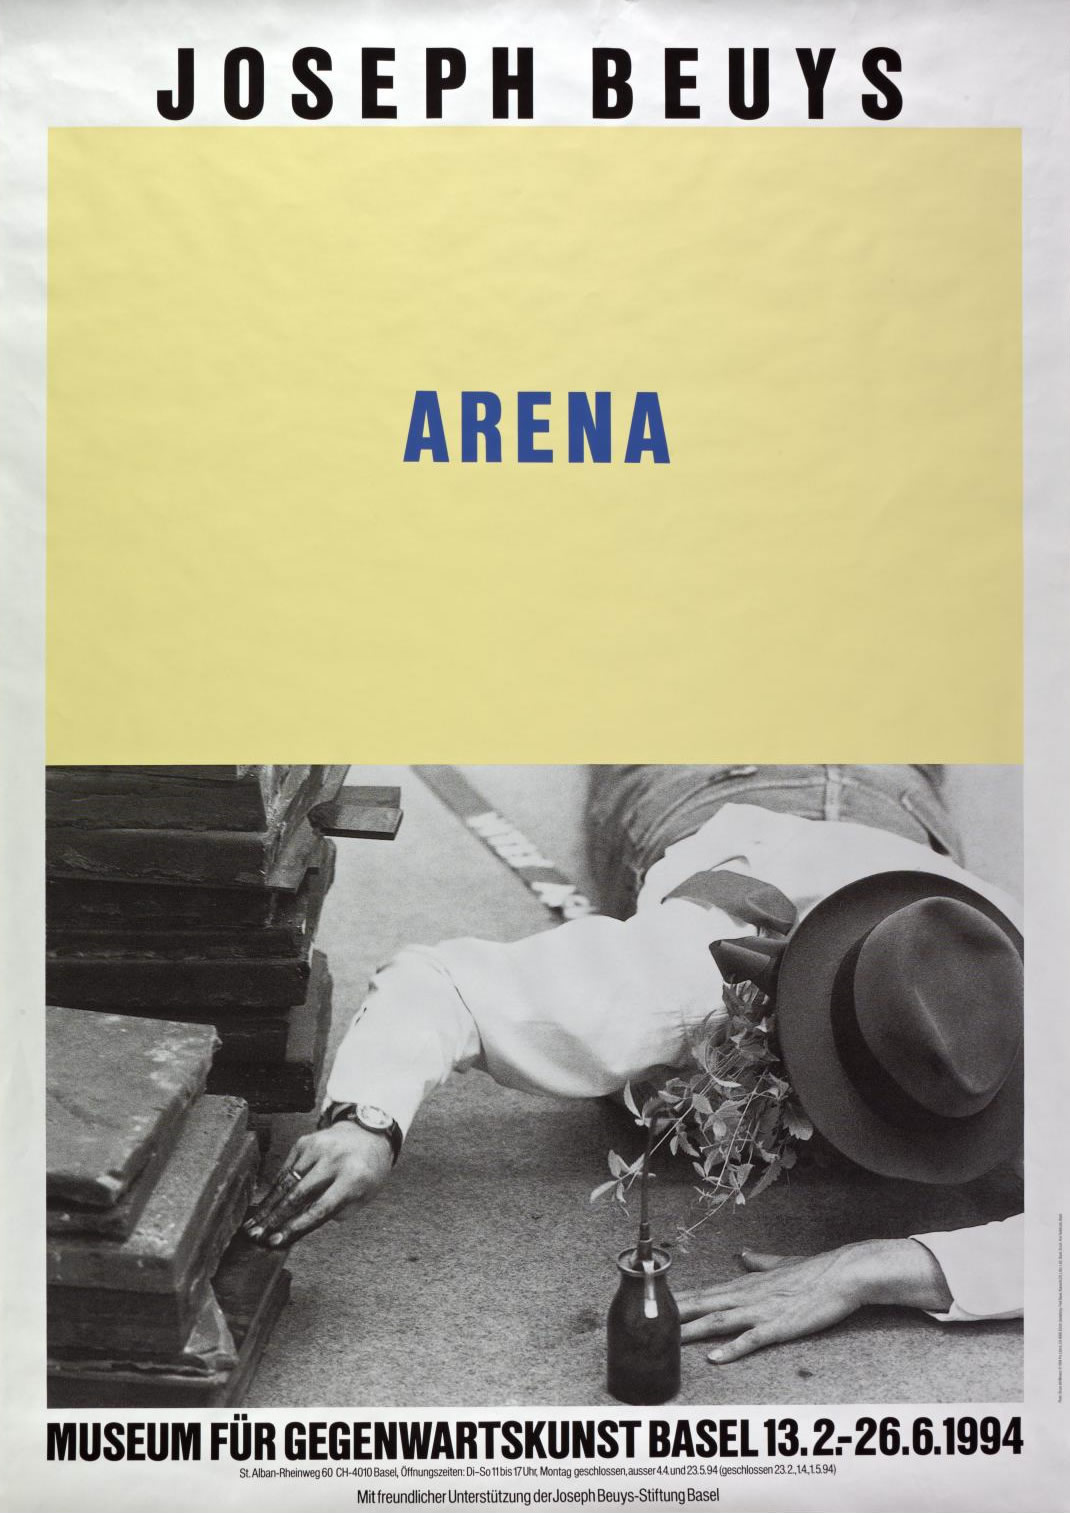 Joseph Beuys: Arena. Museum für Gegenwartskunst, Basel. 1994